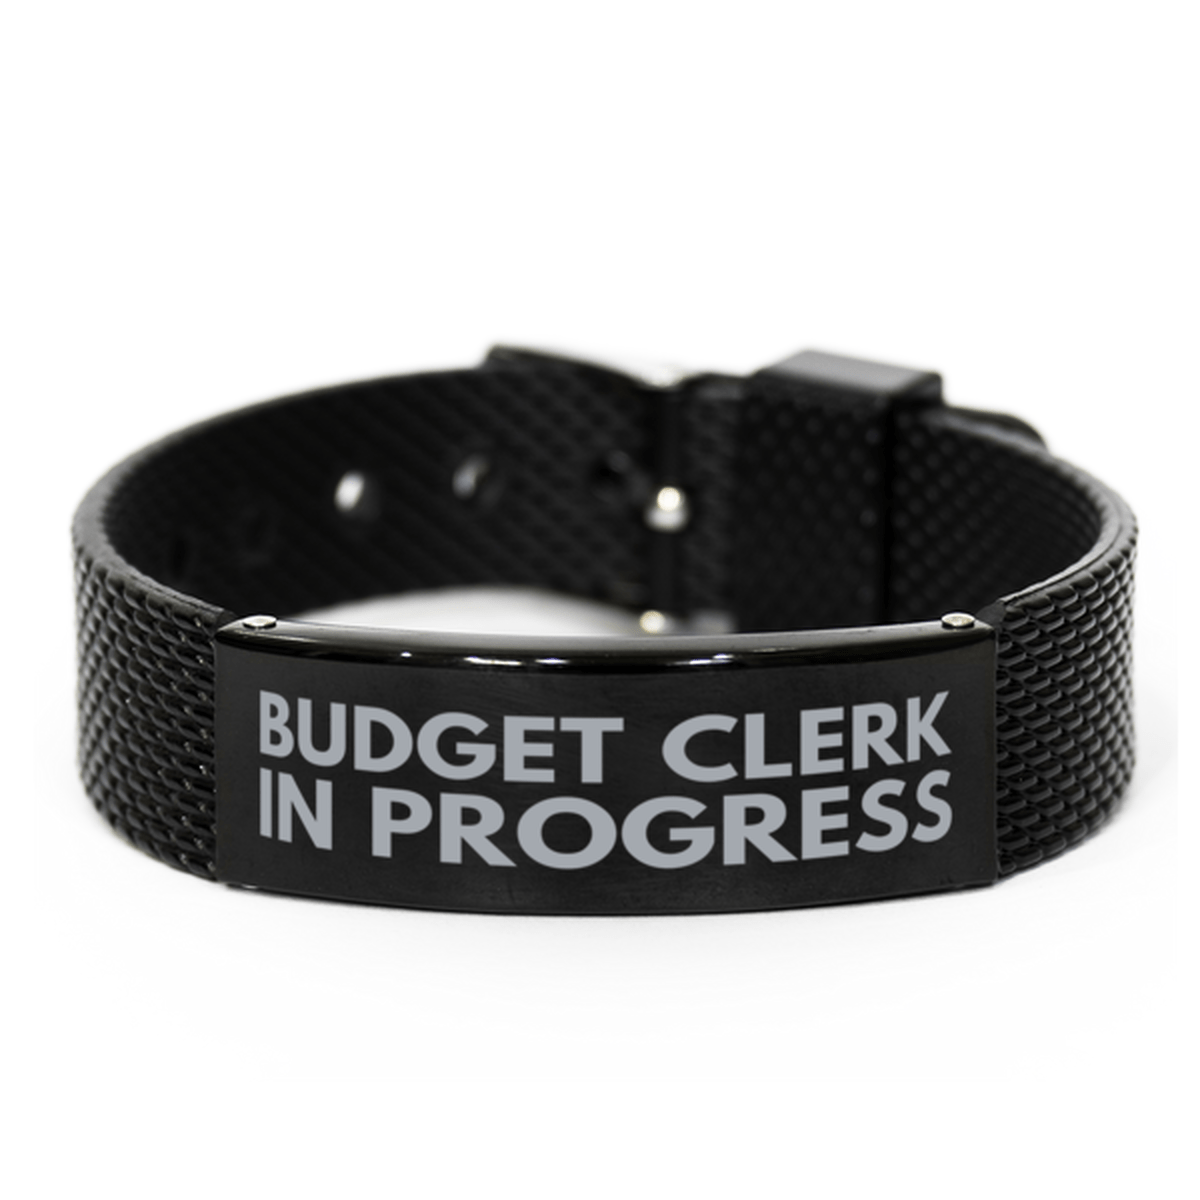 Inspirational Budget Clerk Black Shark Mesh Bracelet, Budget Clerk In Progress, Best Graduation Gifts for Students